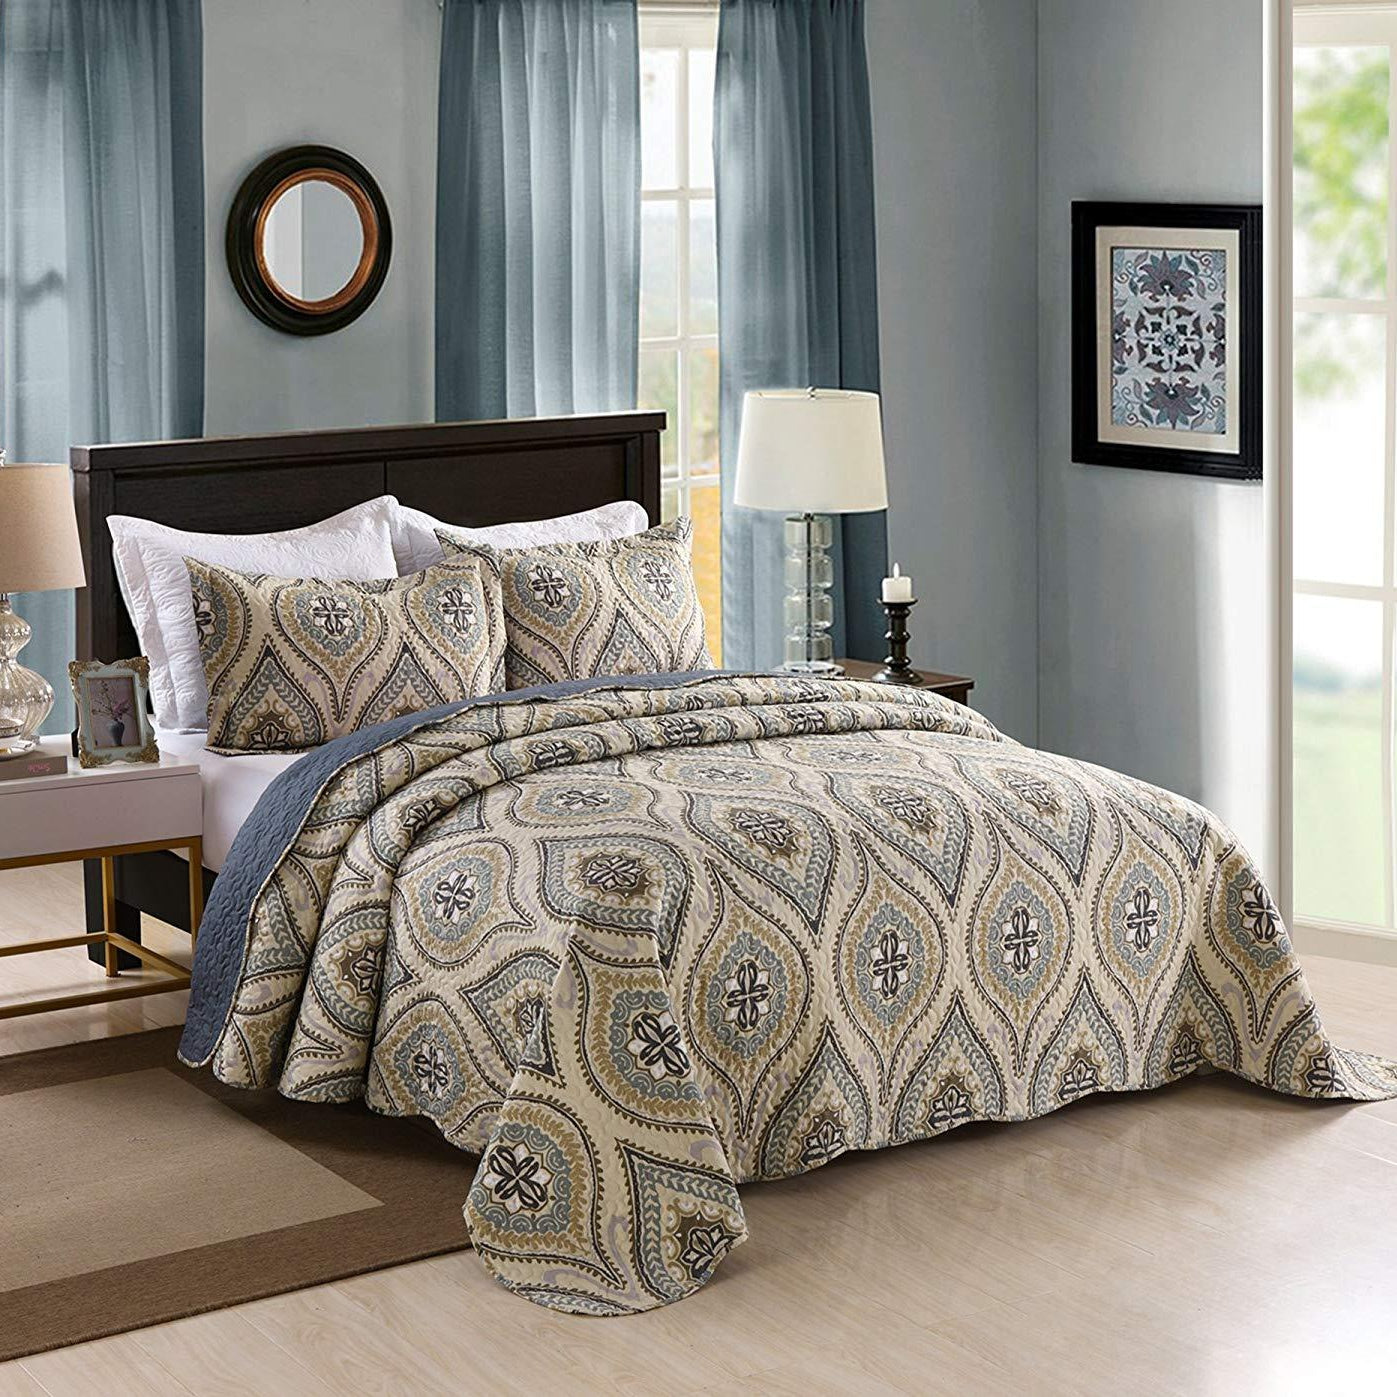 3 Piece Quilted Bedspread Quilt Set Lightweight Bedspread A16